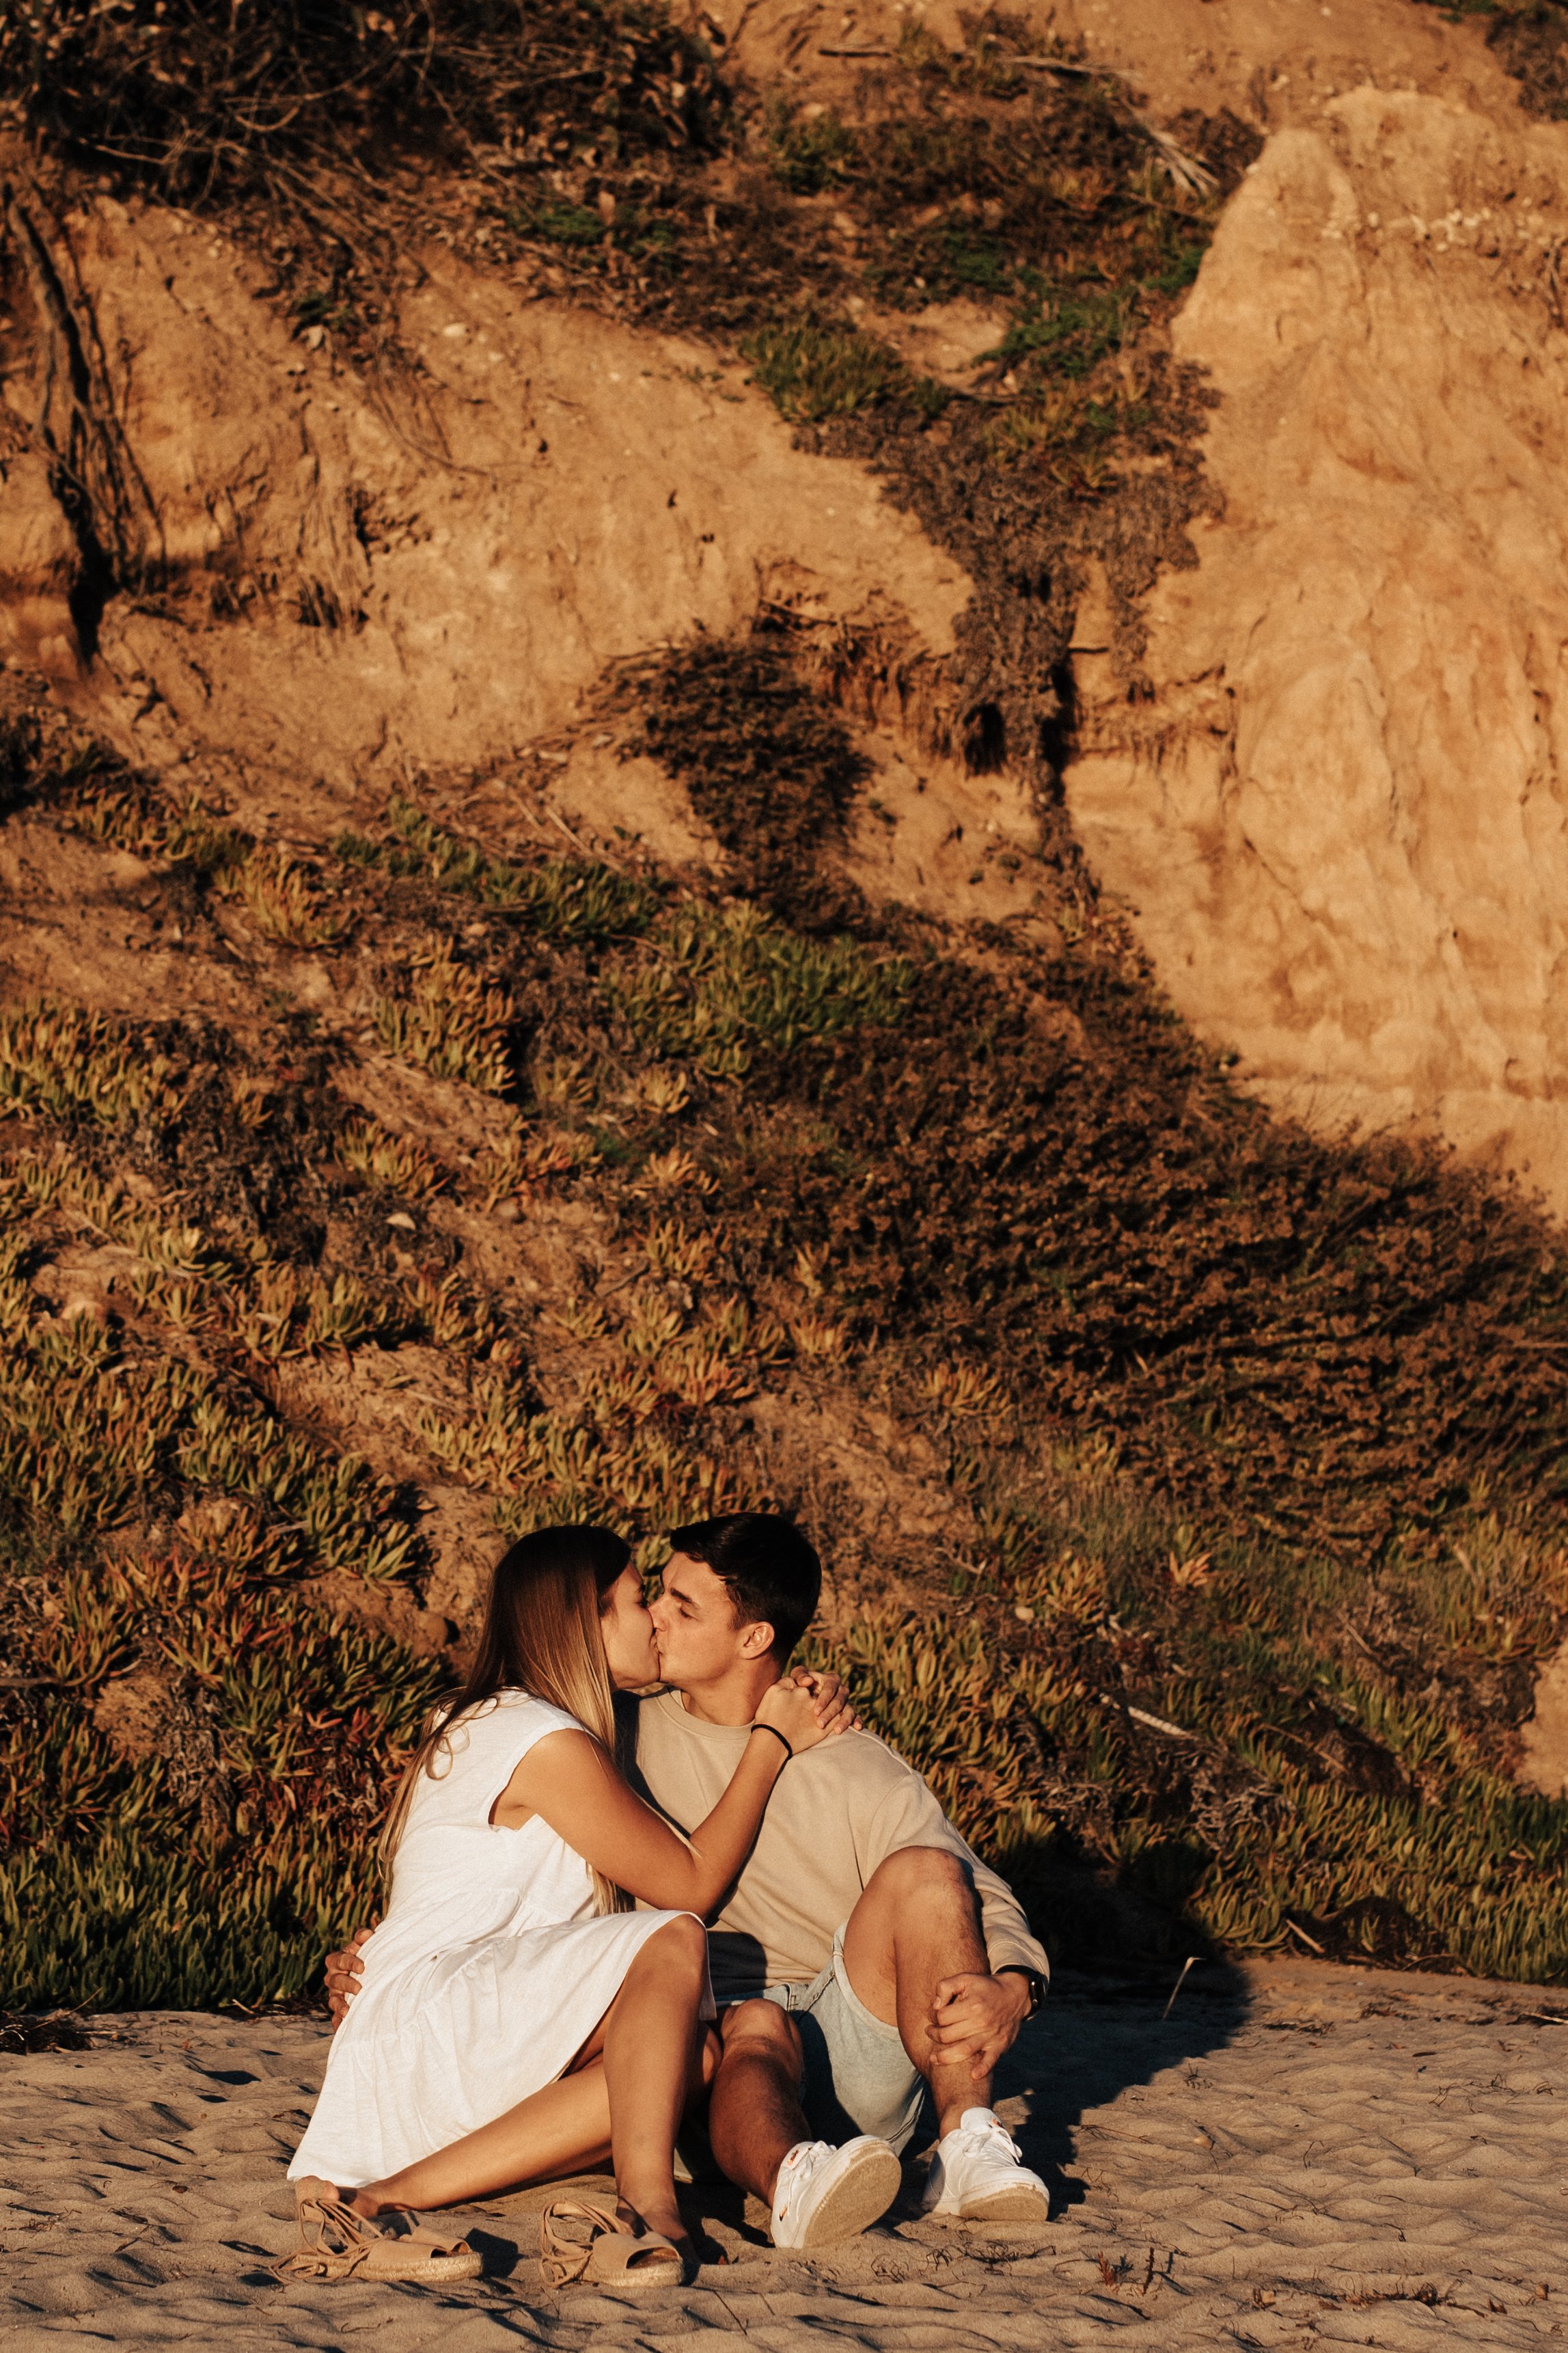 butterfly-beach-santa-barbara-couples-photoshoot-7.jpg